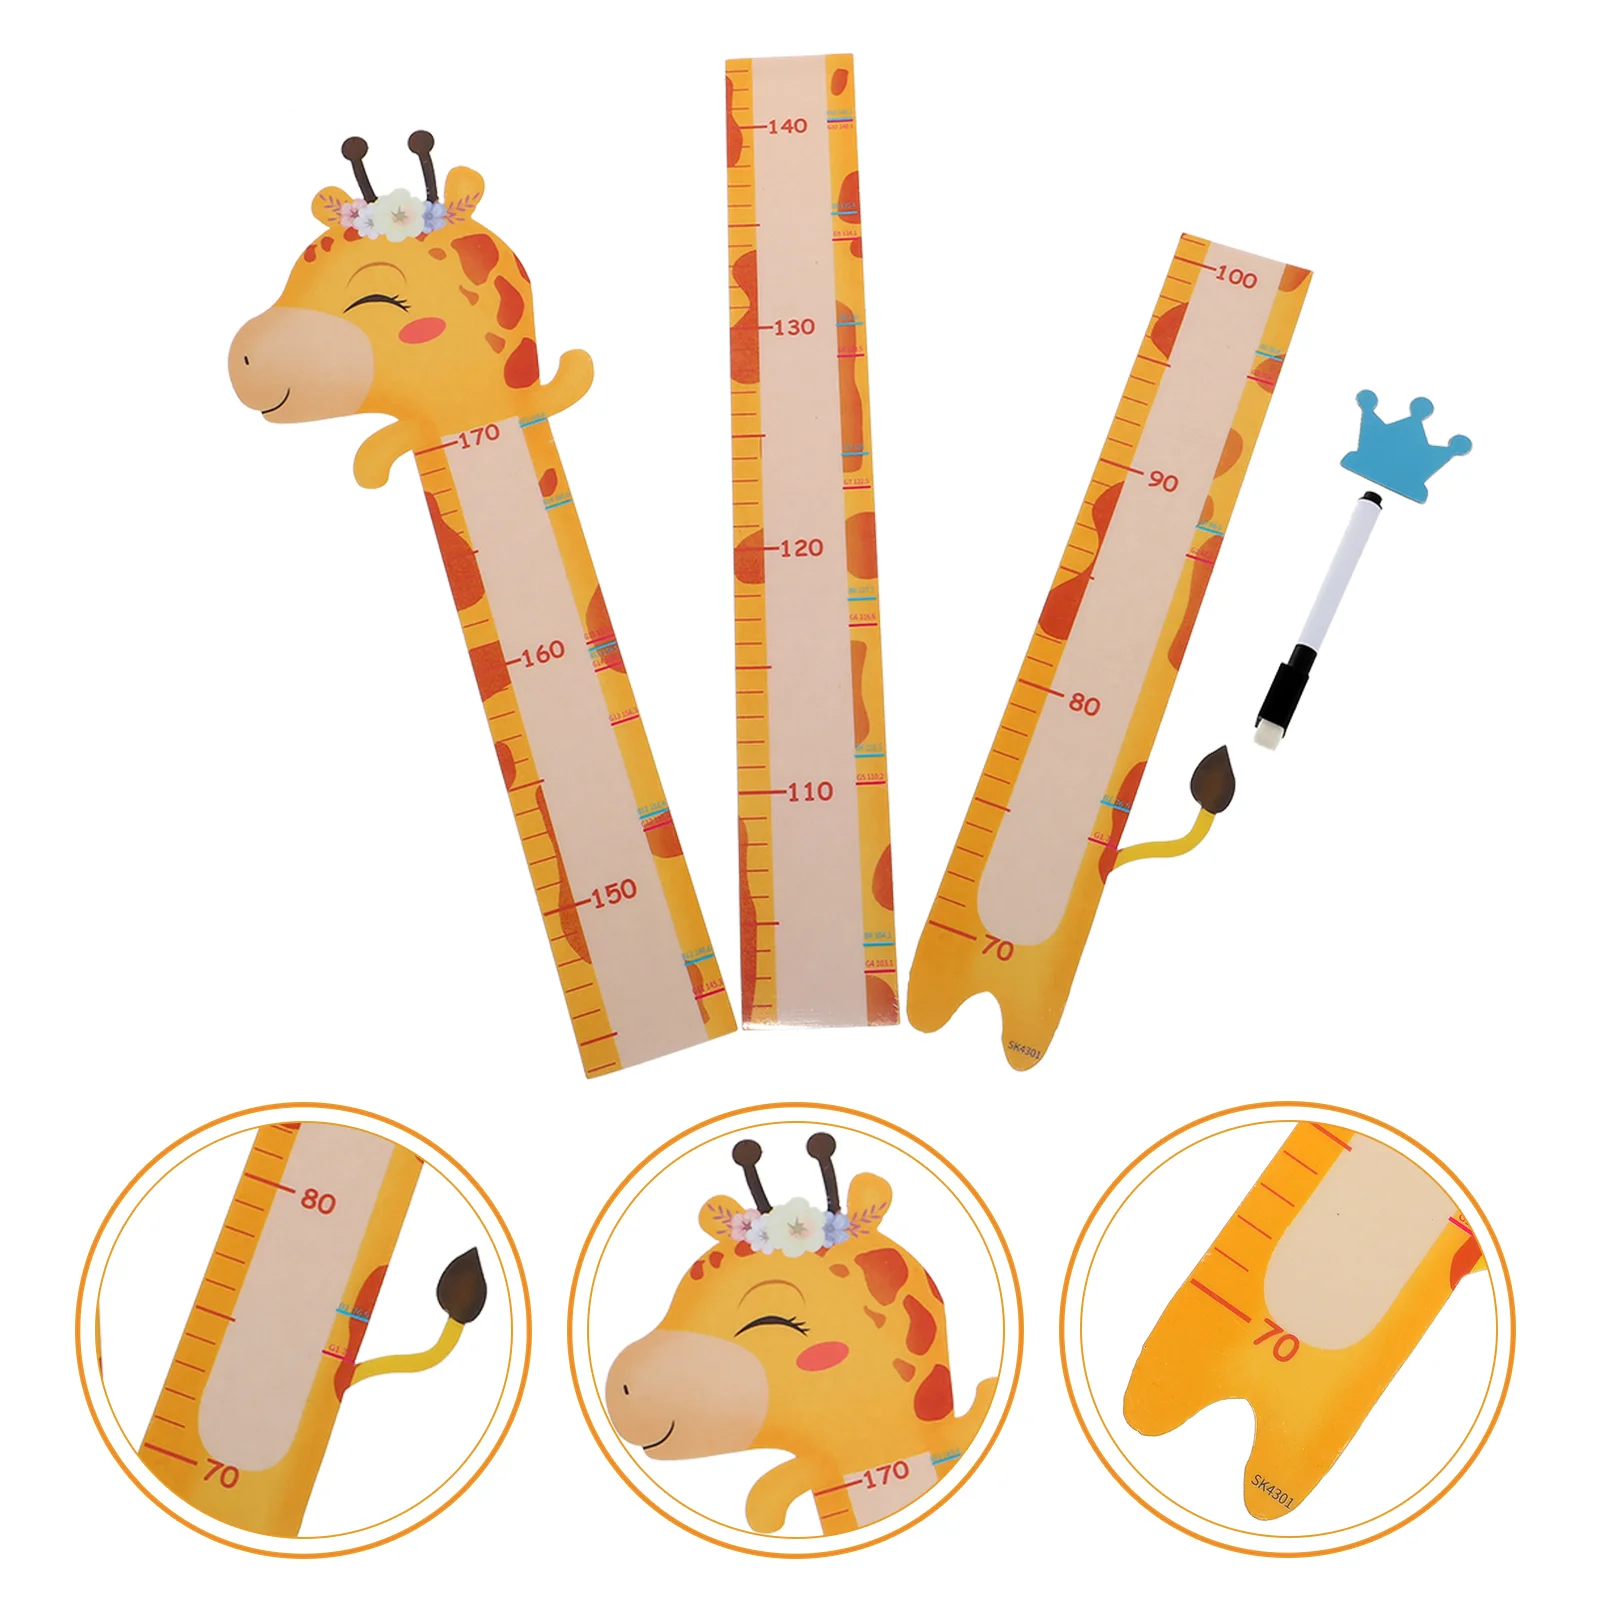 

Height Wall Chart Growth Ruler Sticker Decal Decor Anime Measurement Measure Animal Measuring Babykid Kids Indicator Diy